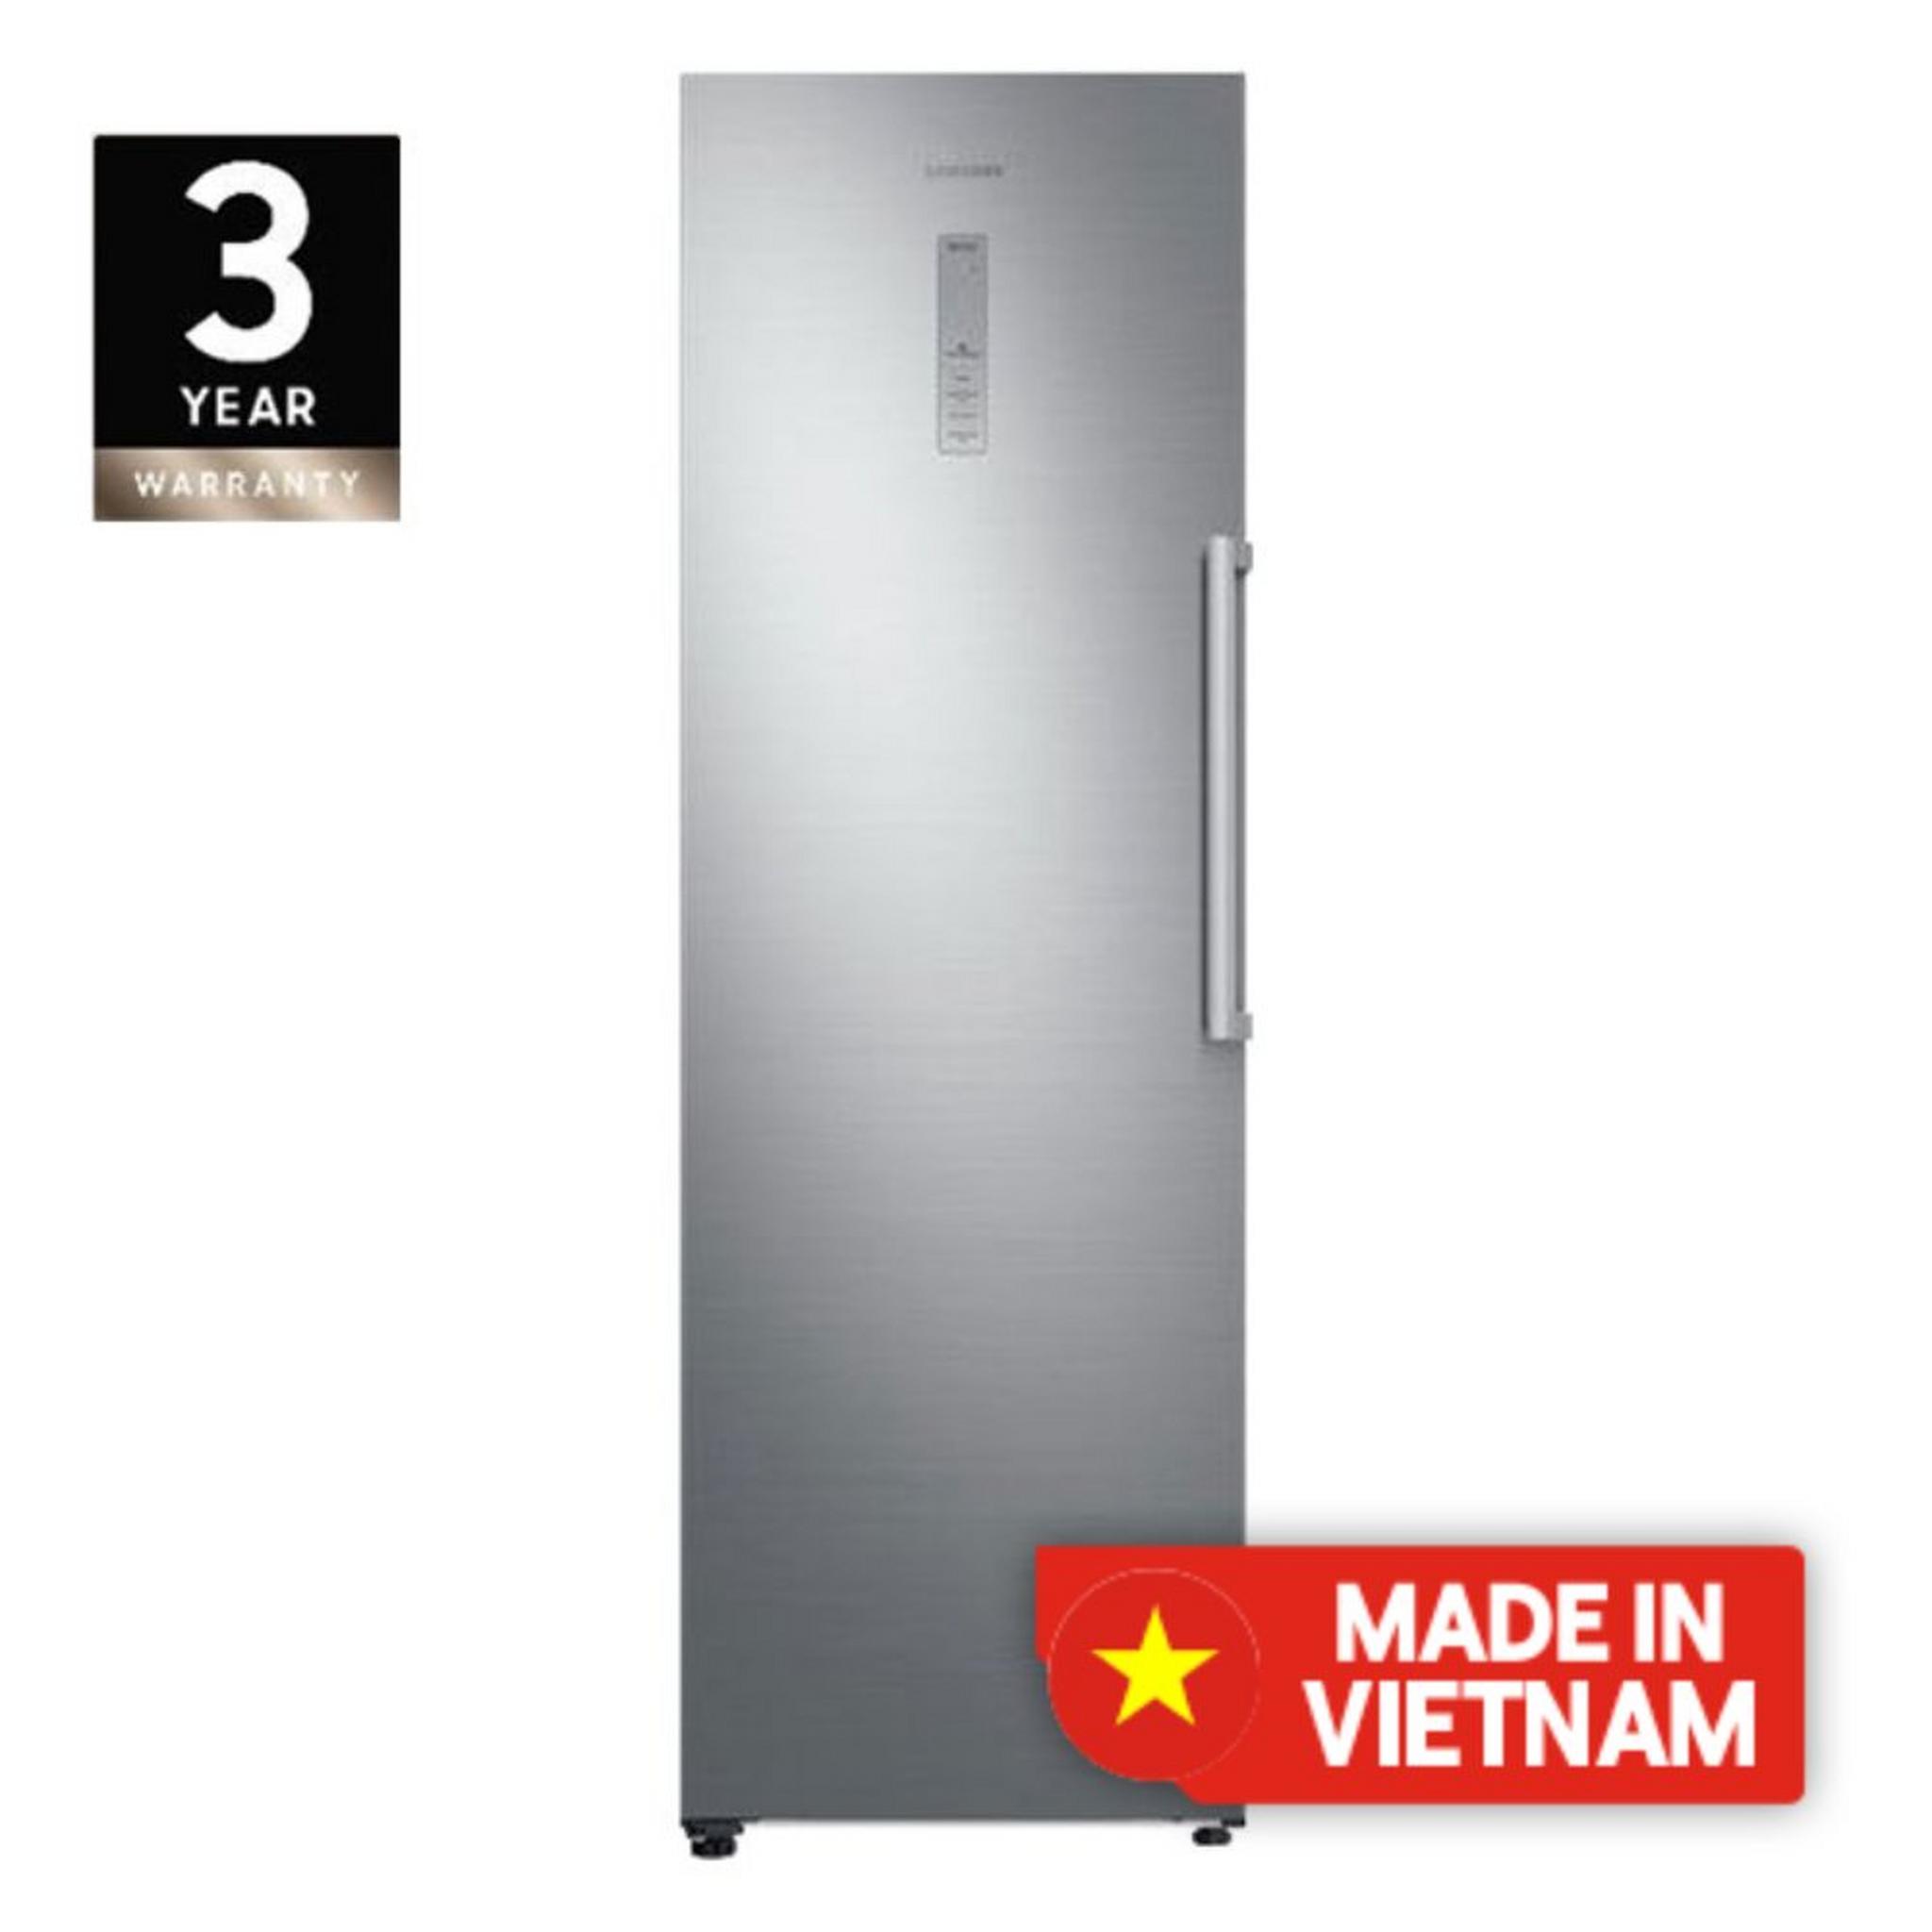 Samsung 12 Cft. Upright Freezer - (RZ32M71207F) - Stainless Steel